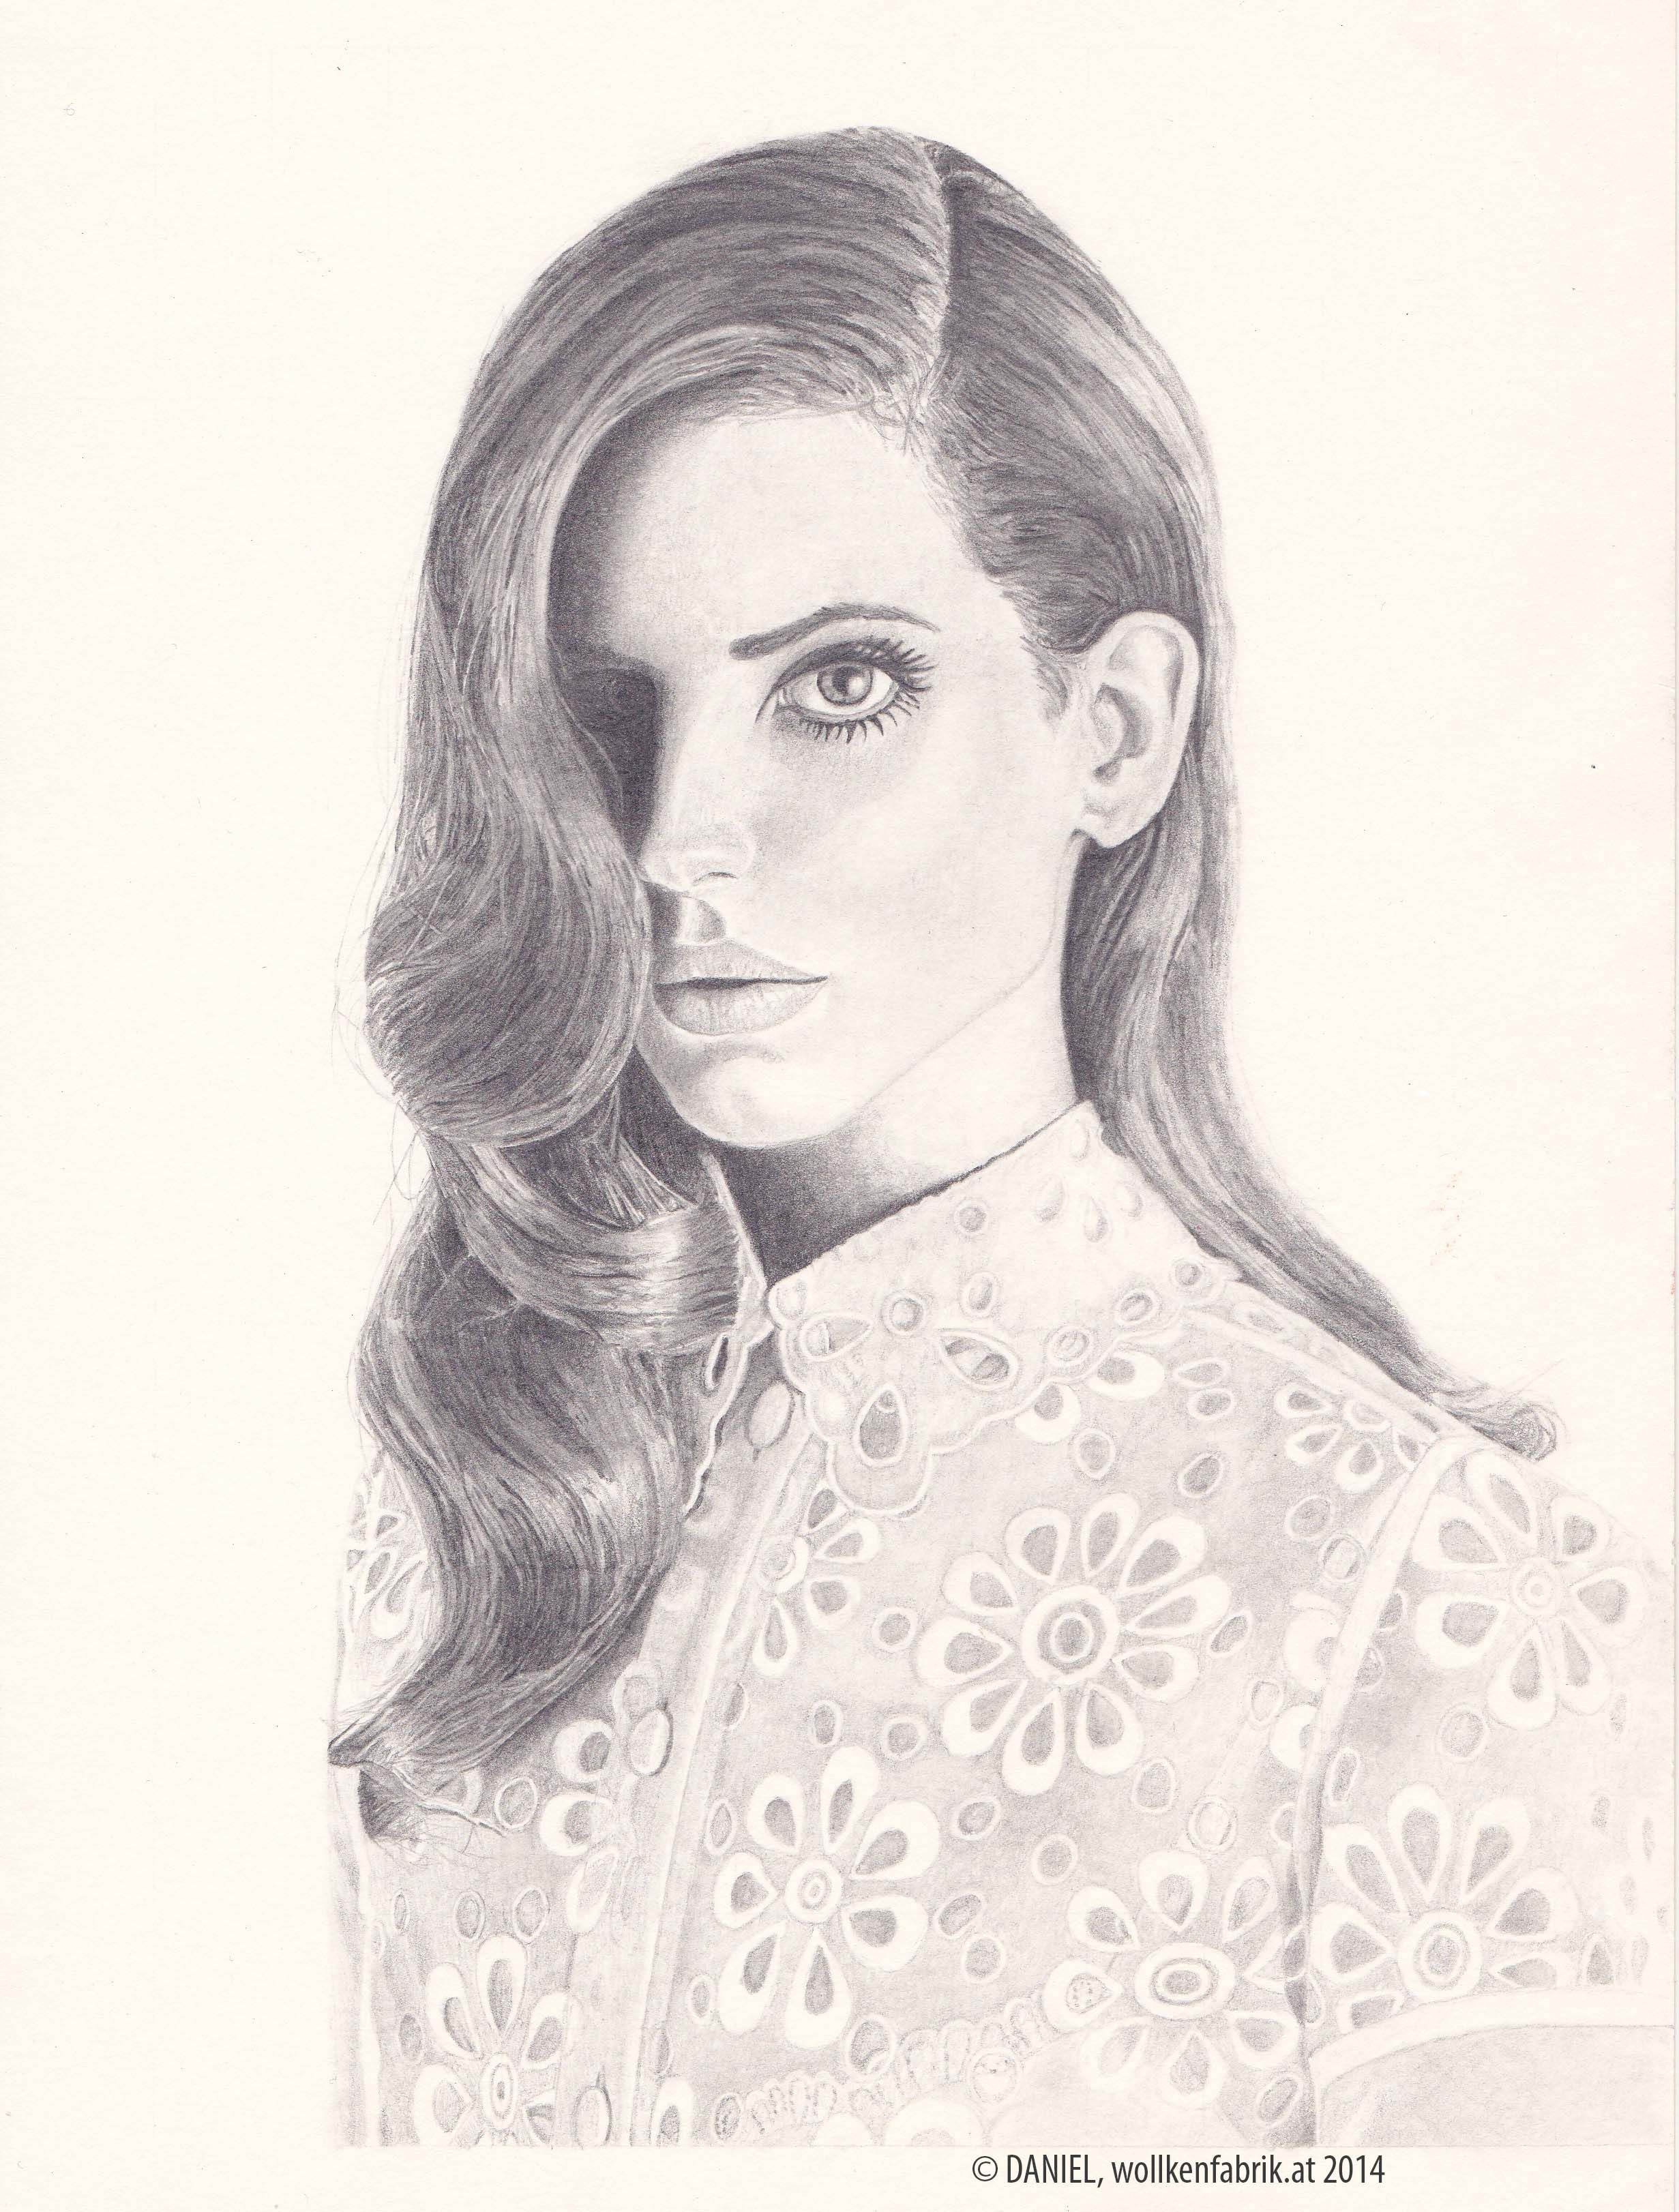 Portrait Lana del Rey, hand drawing pencil on paper